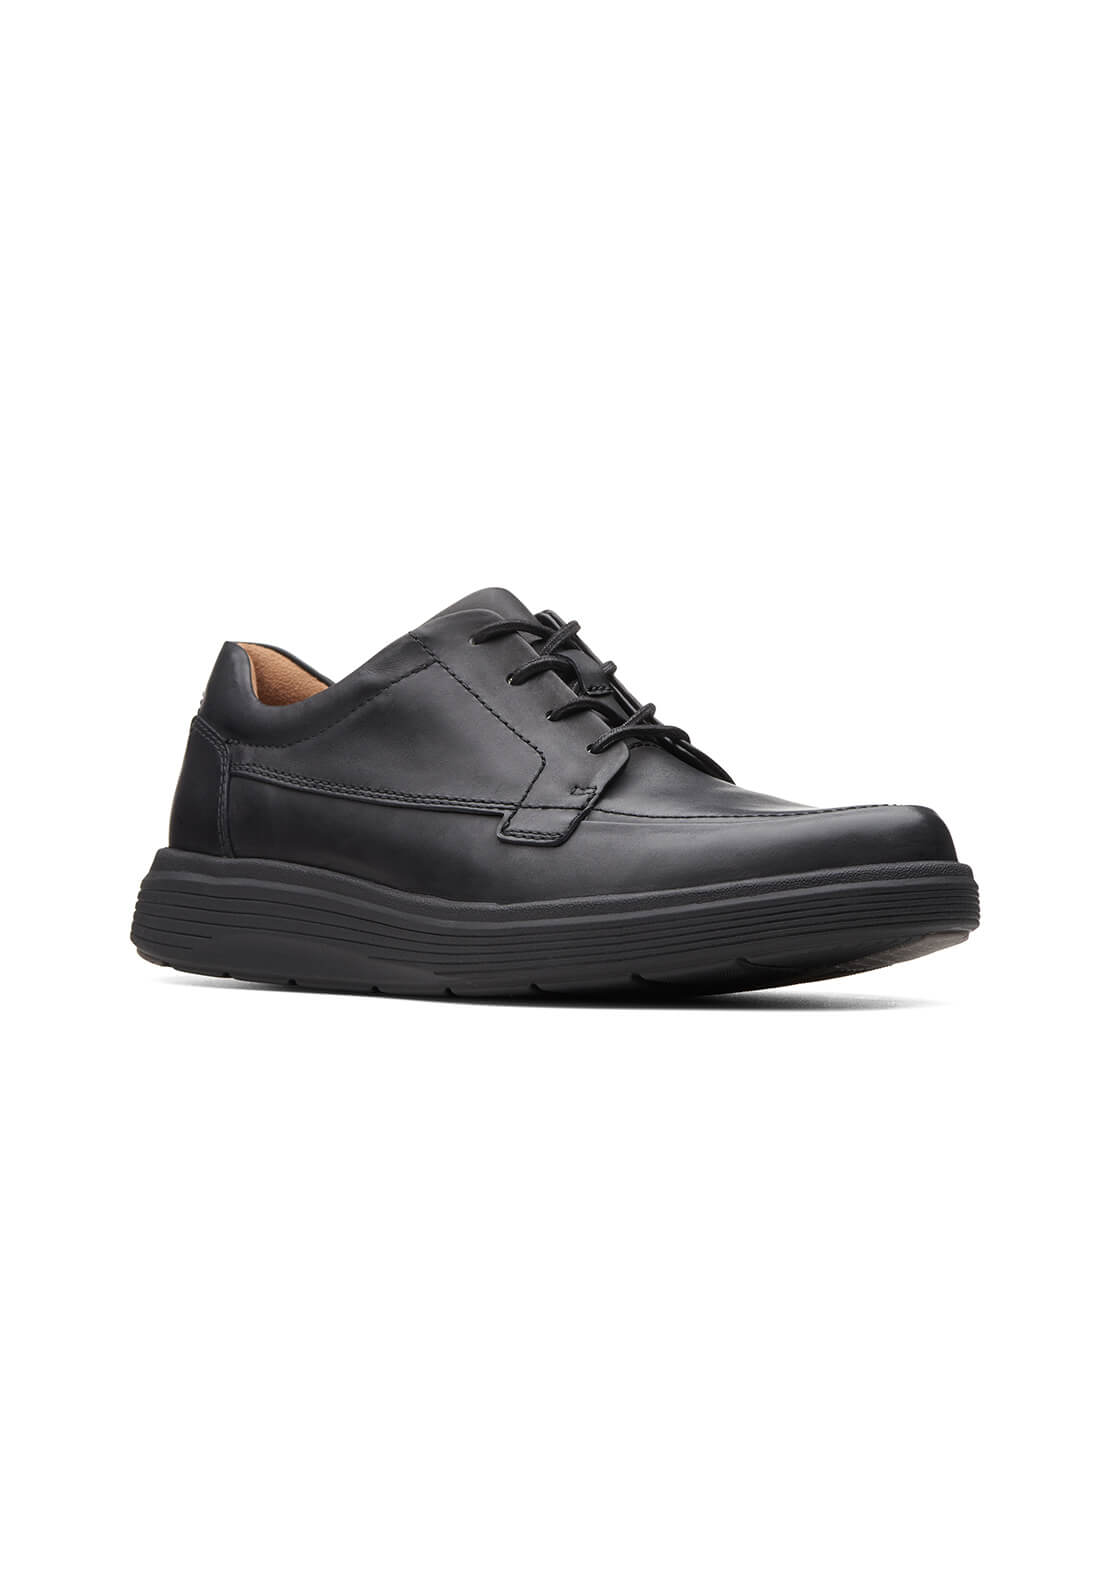 Clarks Un Abode Ease Casual Shoe - Black 1 Shaws Department Stores